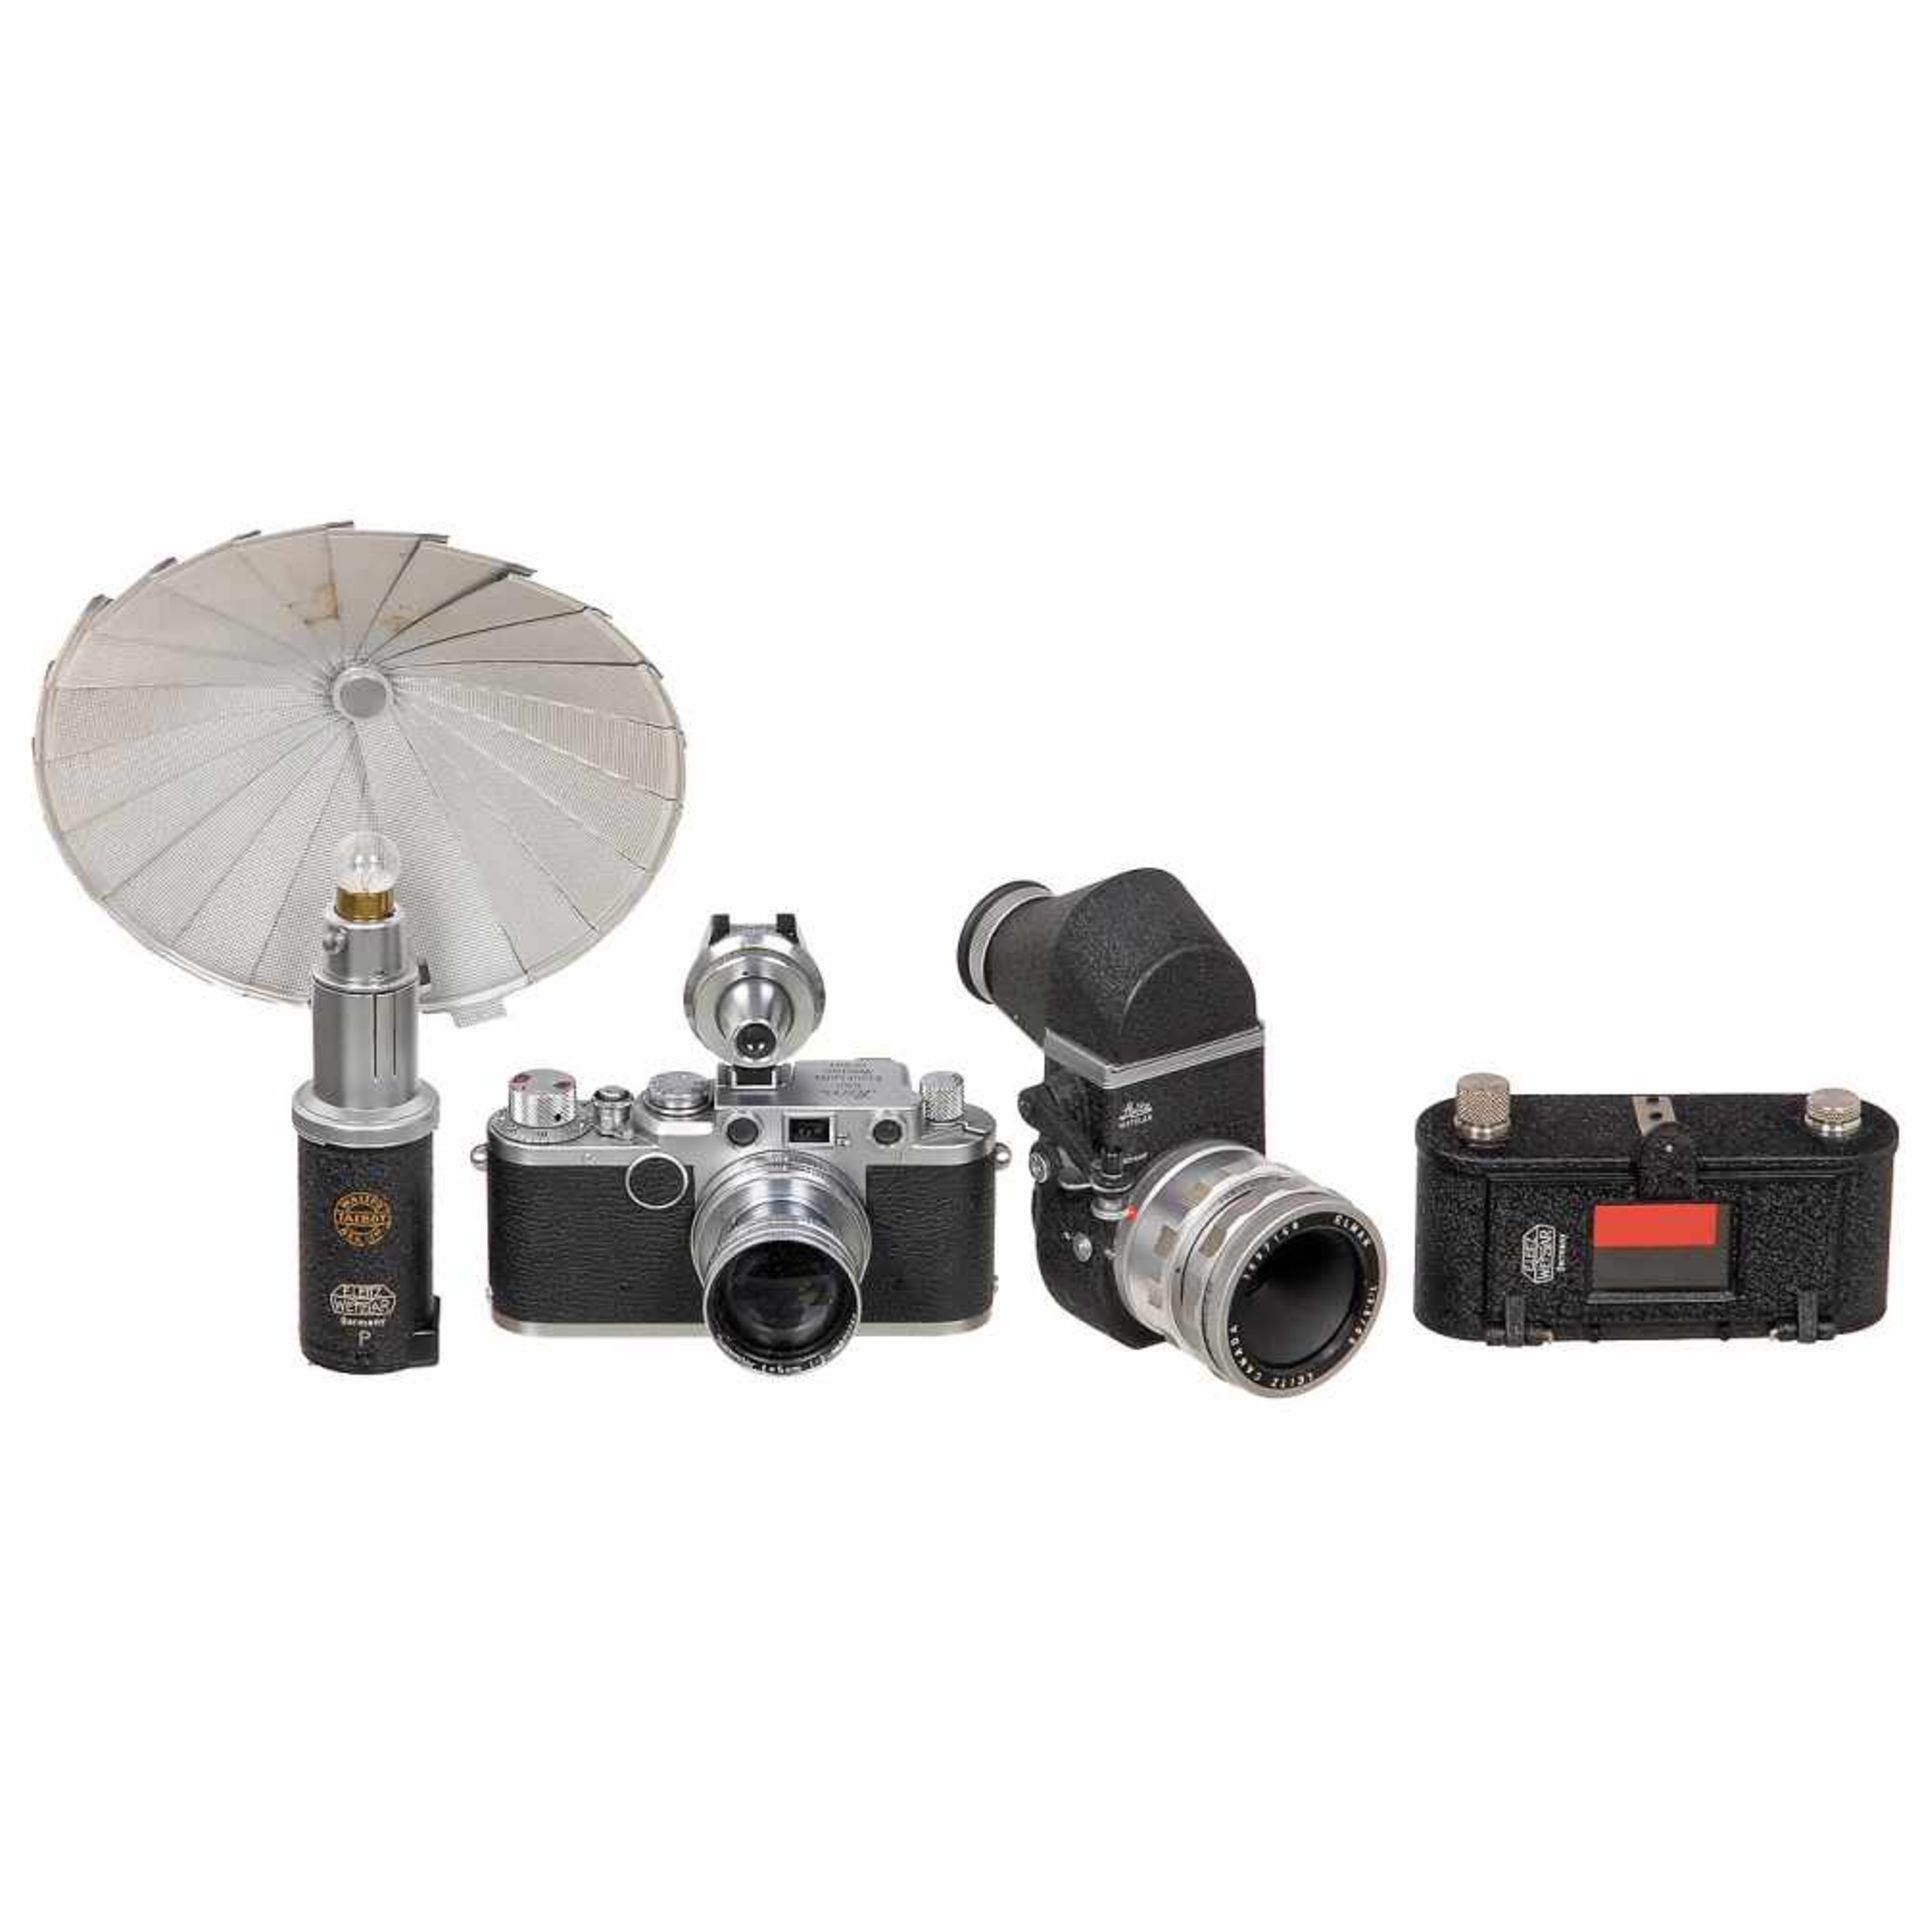 Leica IIf with Accessories, 1951Leitz, Wetzlar. 1) Leica IIf, no. 574428, red-dial